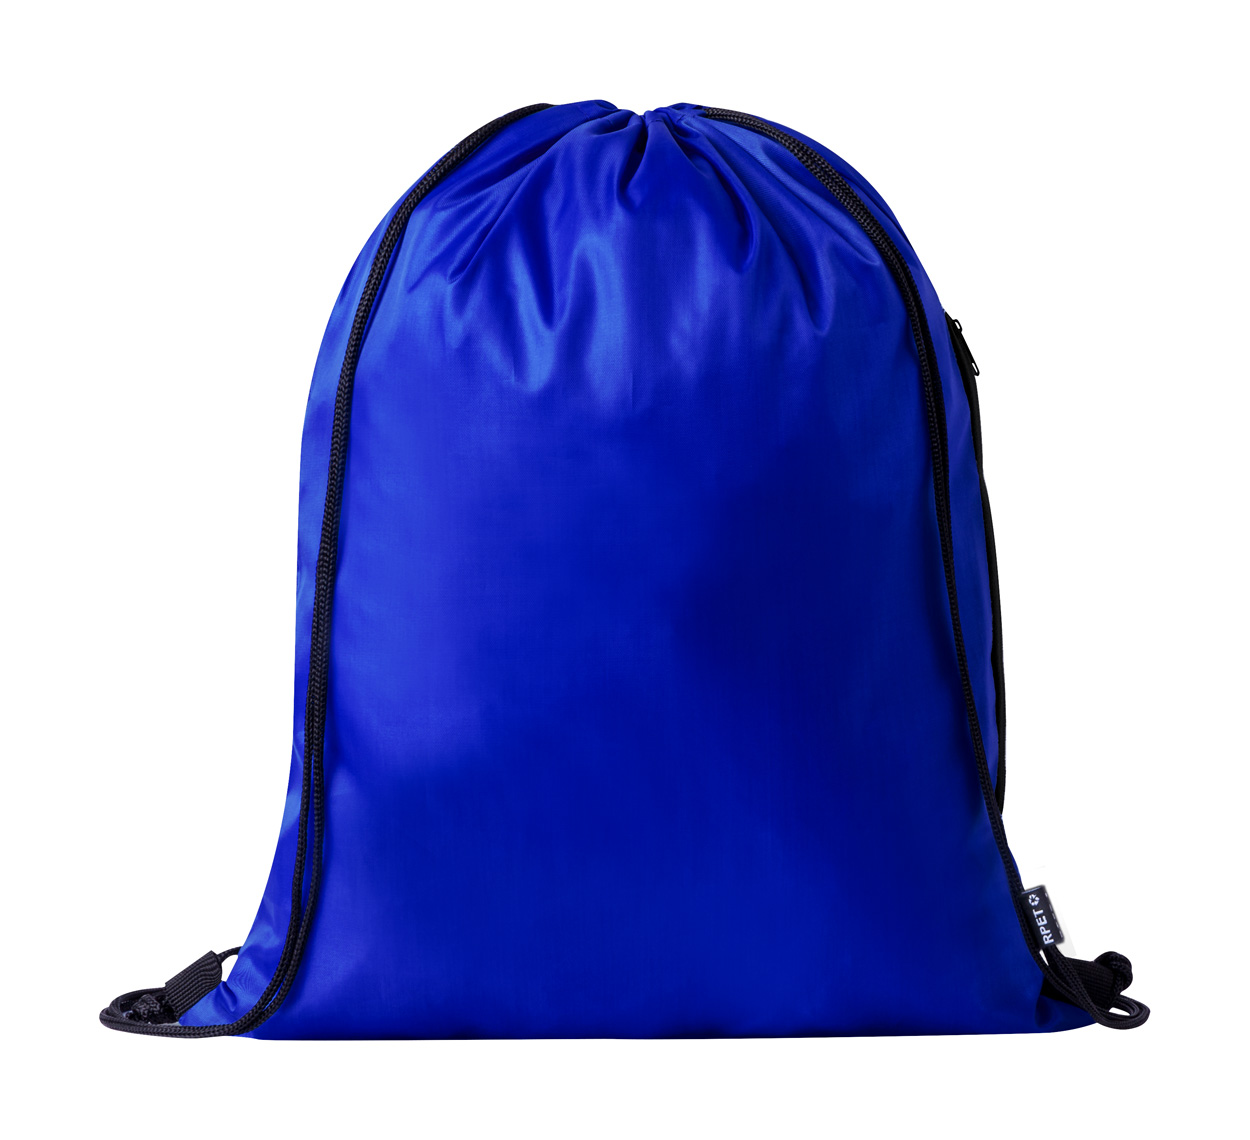 Hildan RPET drawstring bag - blue